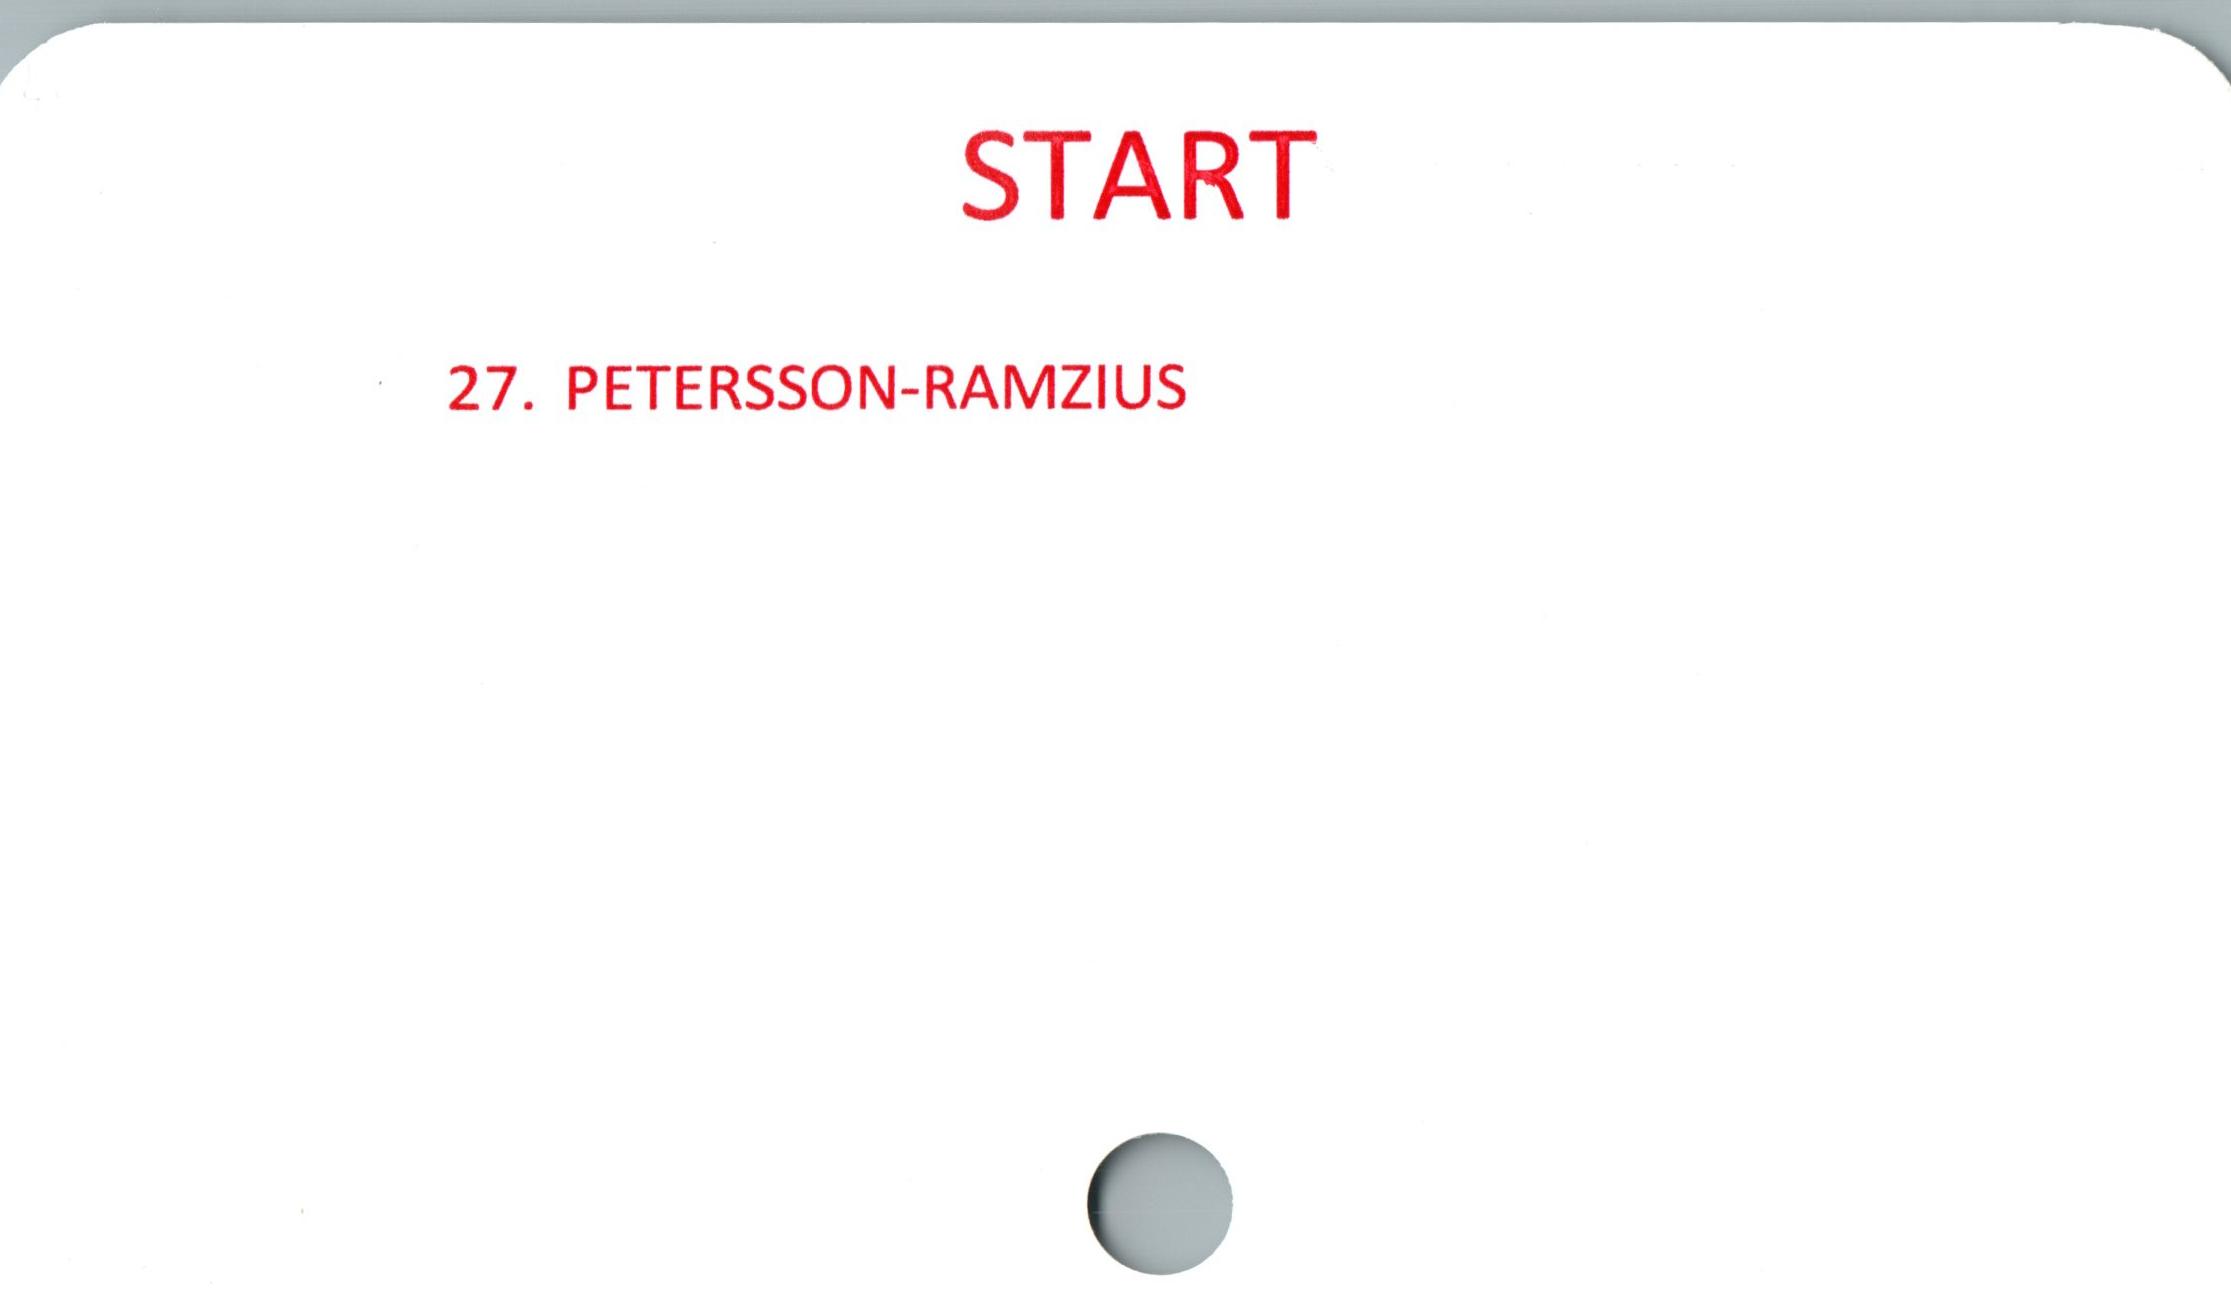  ﻿START

27. PETERSSON-RAMZIUS